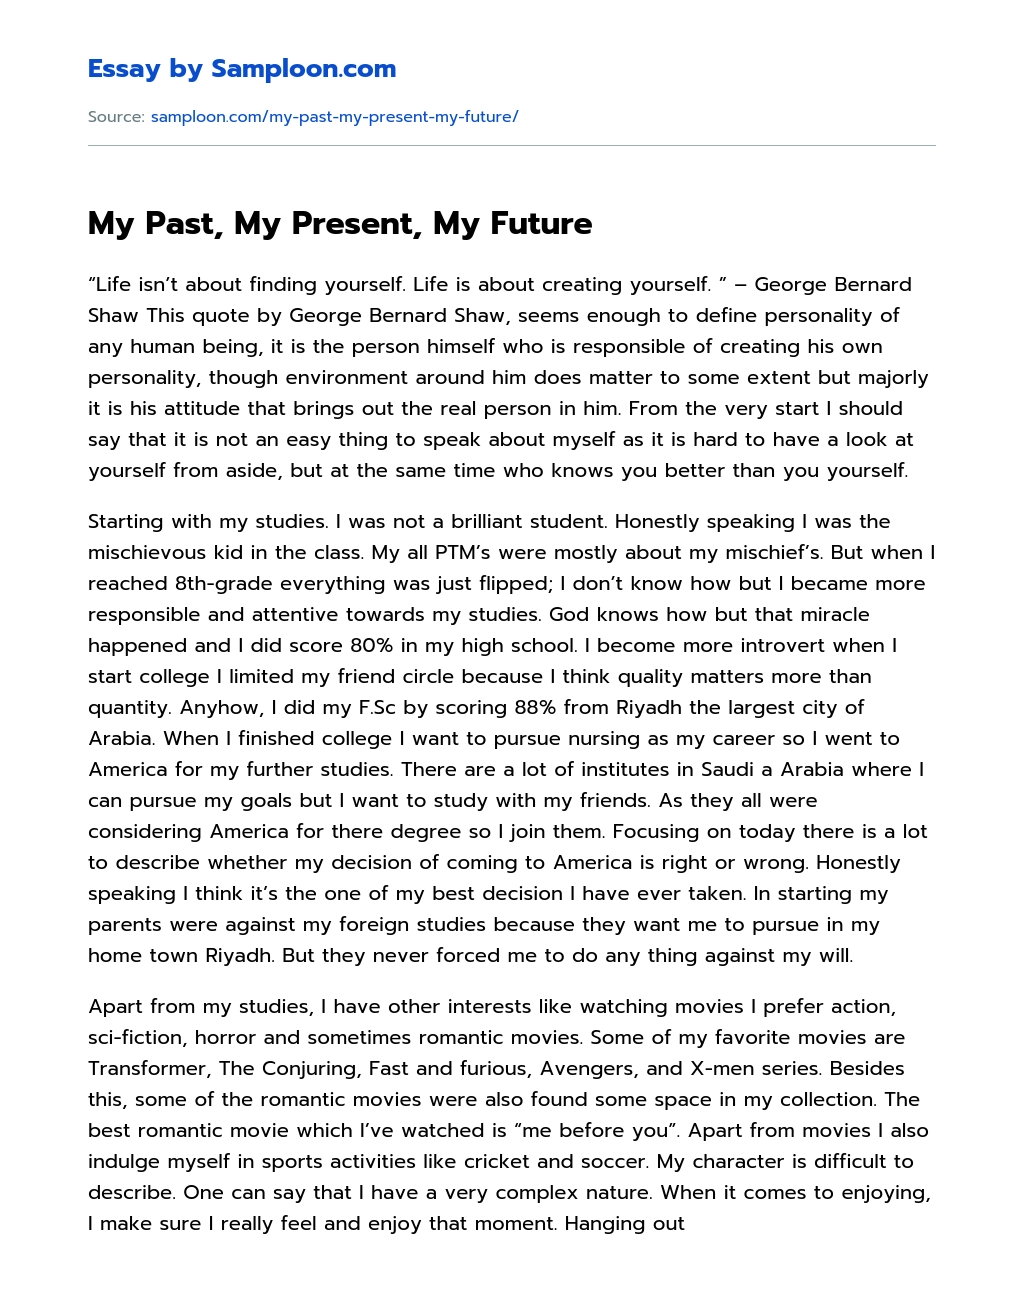 My Past, My Present, My Future essay